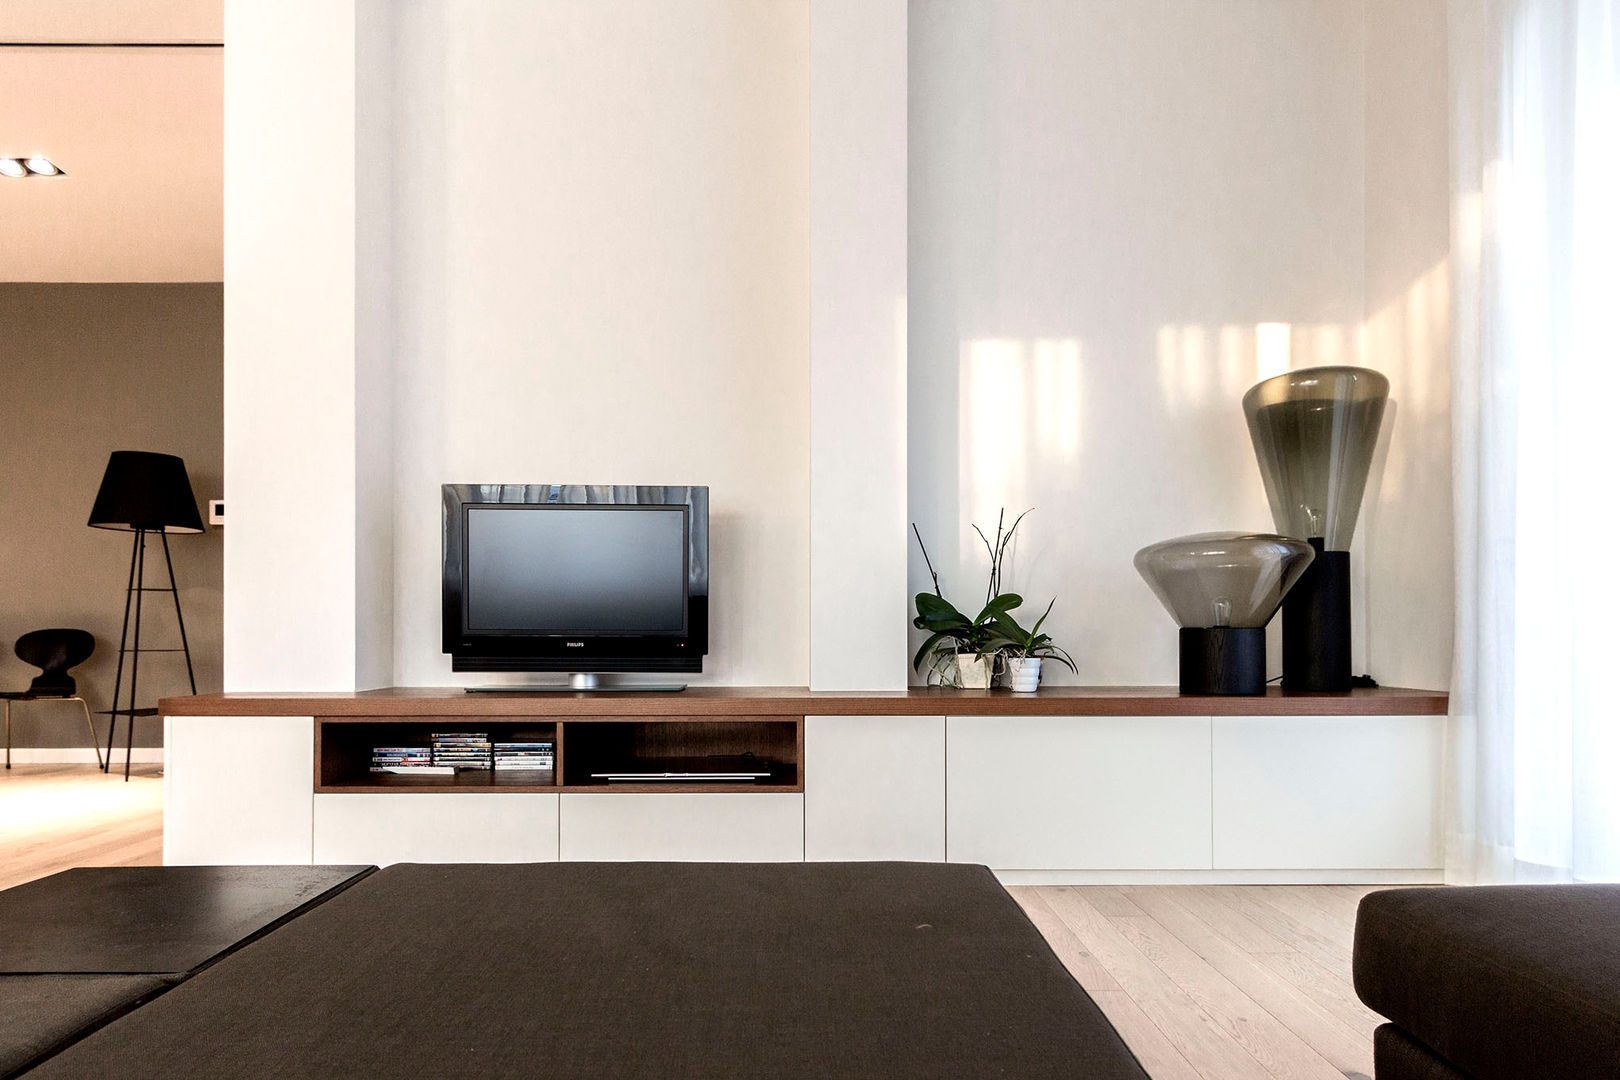 Appartamento Residenziale - Cernobbio 2015, Galleria del Vento Galleria del Vento Modern living room